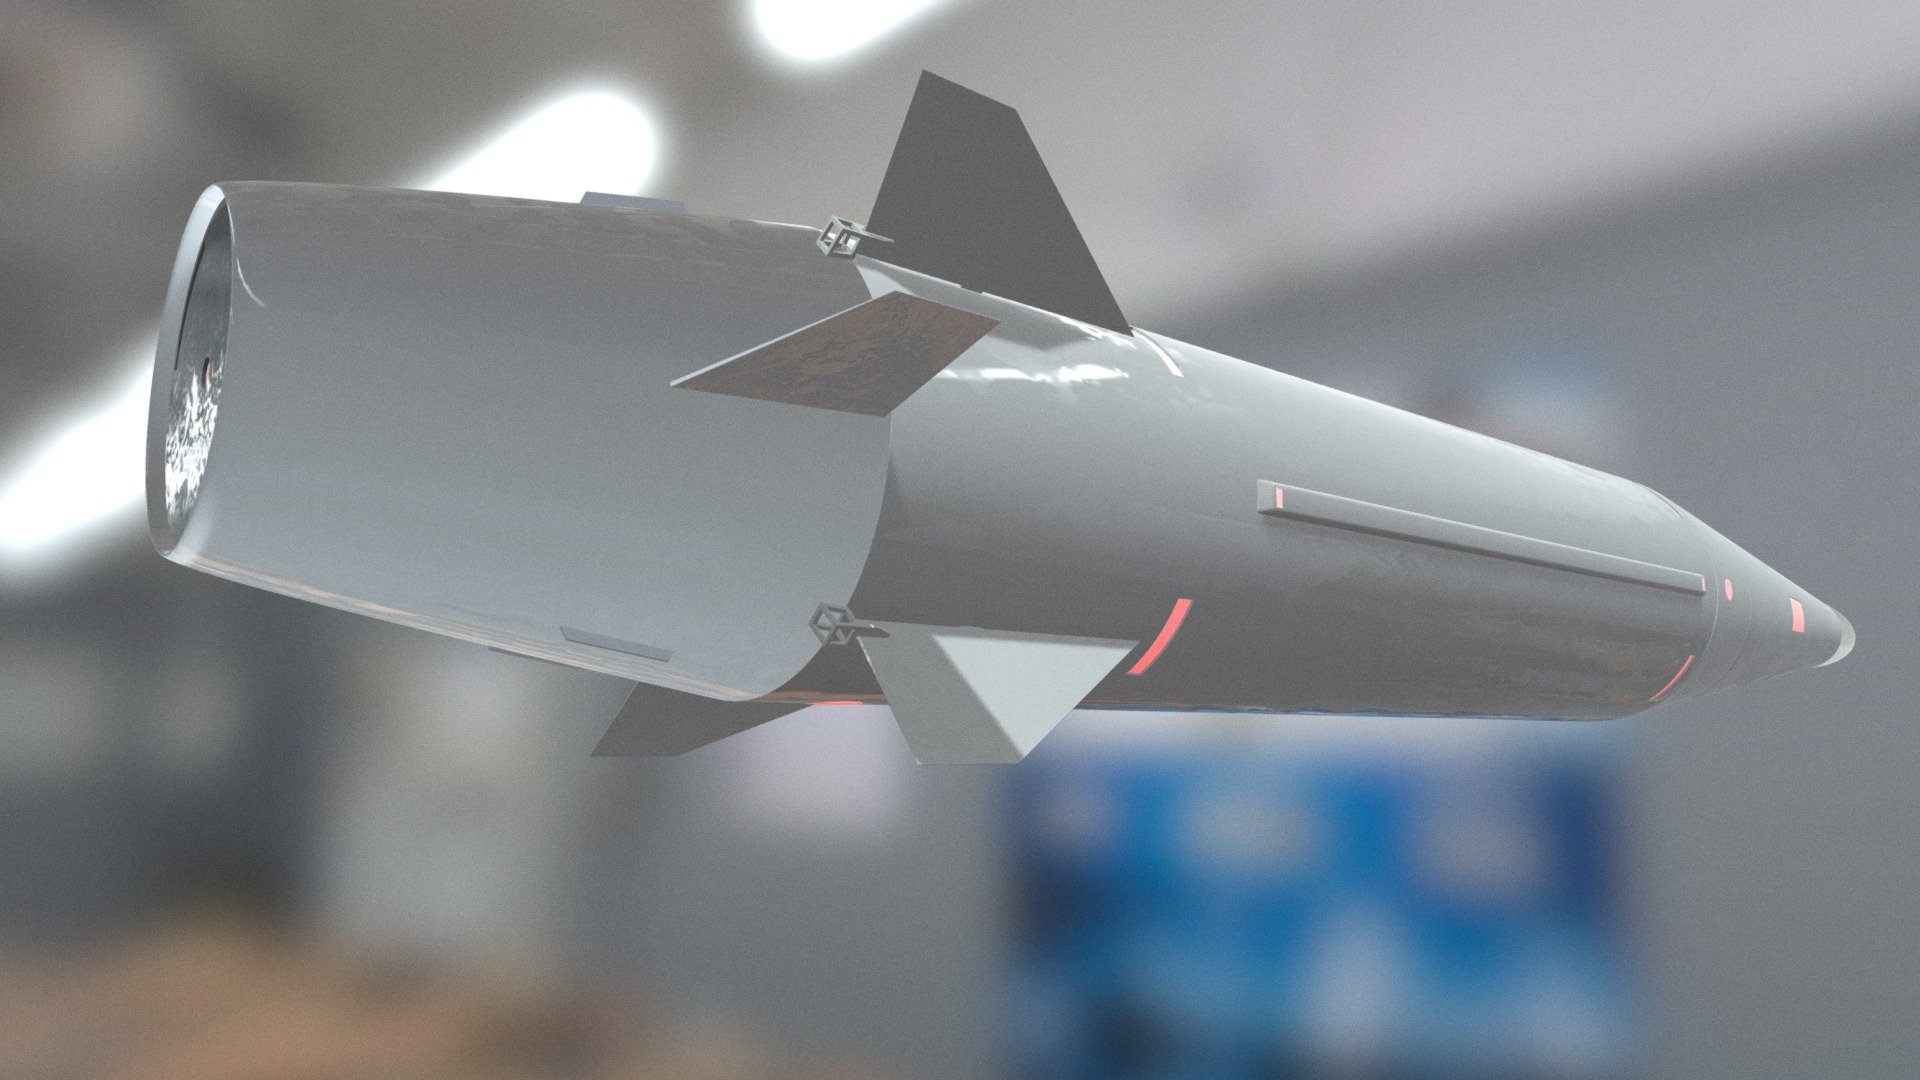 Kh-47M2 Kinzhal - Russian missile kinzhal - 3D model by Hamza (@zeinaldin) 3d model